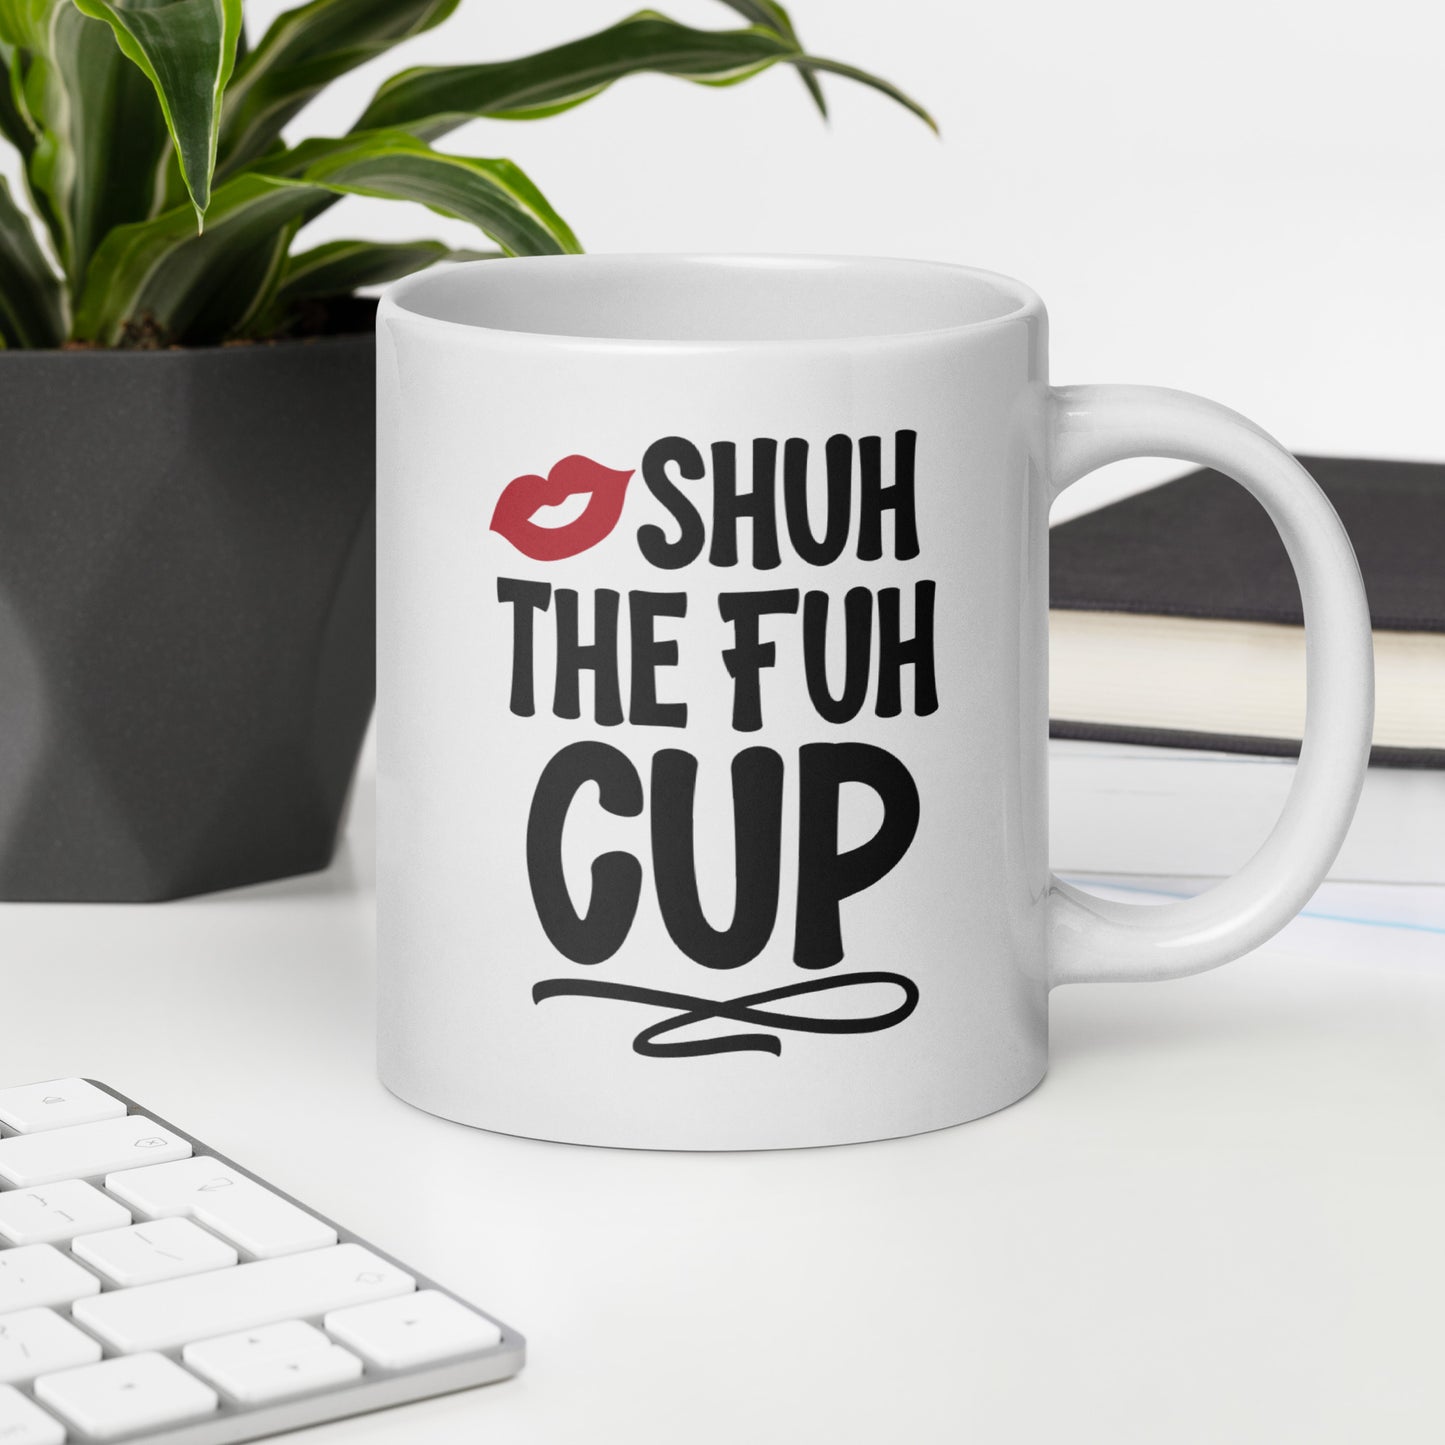 Shuh the Fuh Cup White Ceramic Coffee Mug